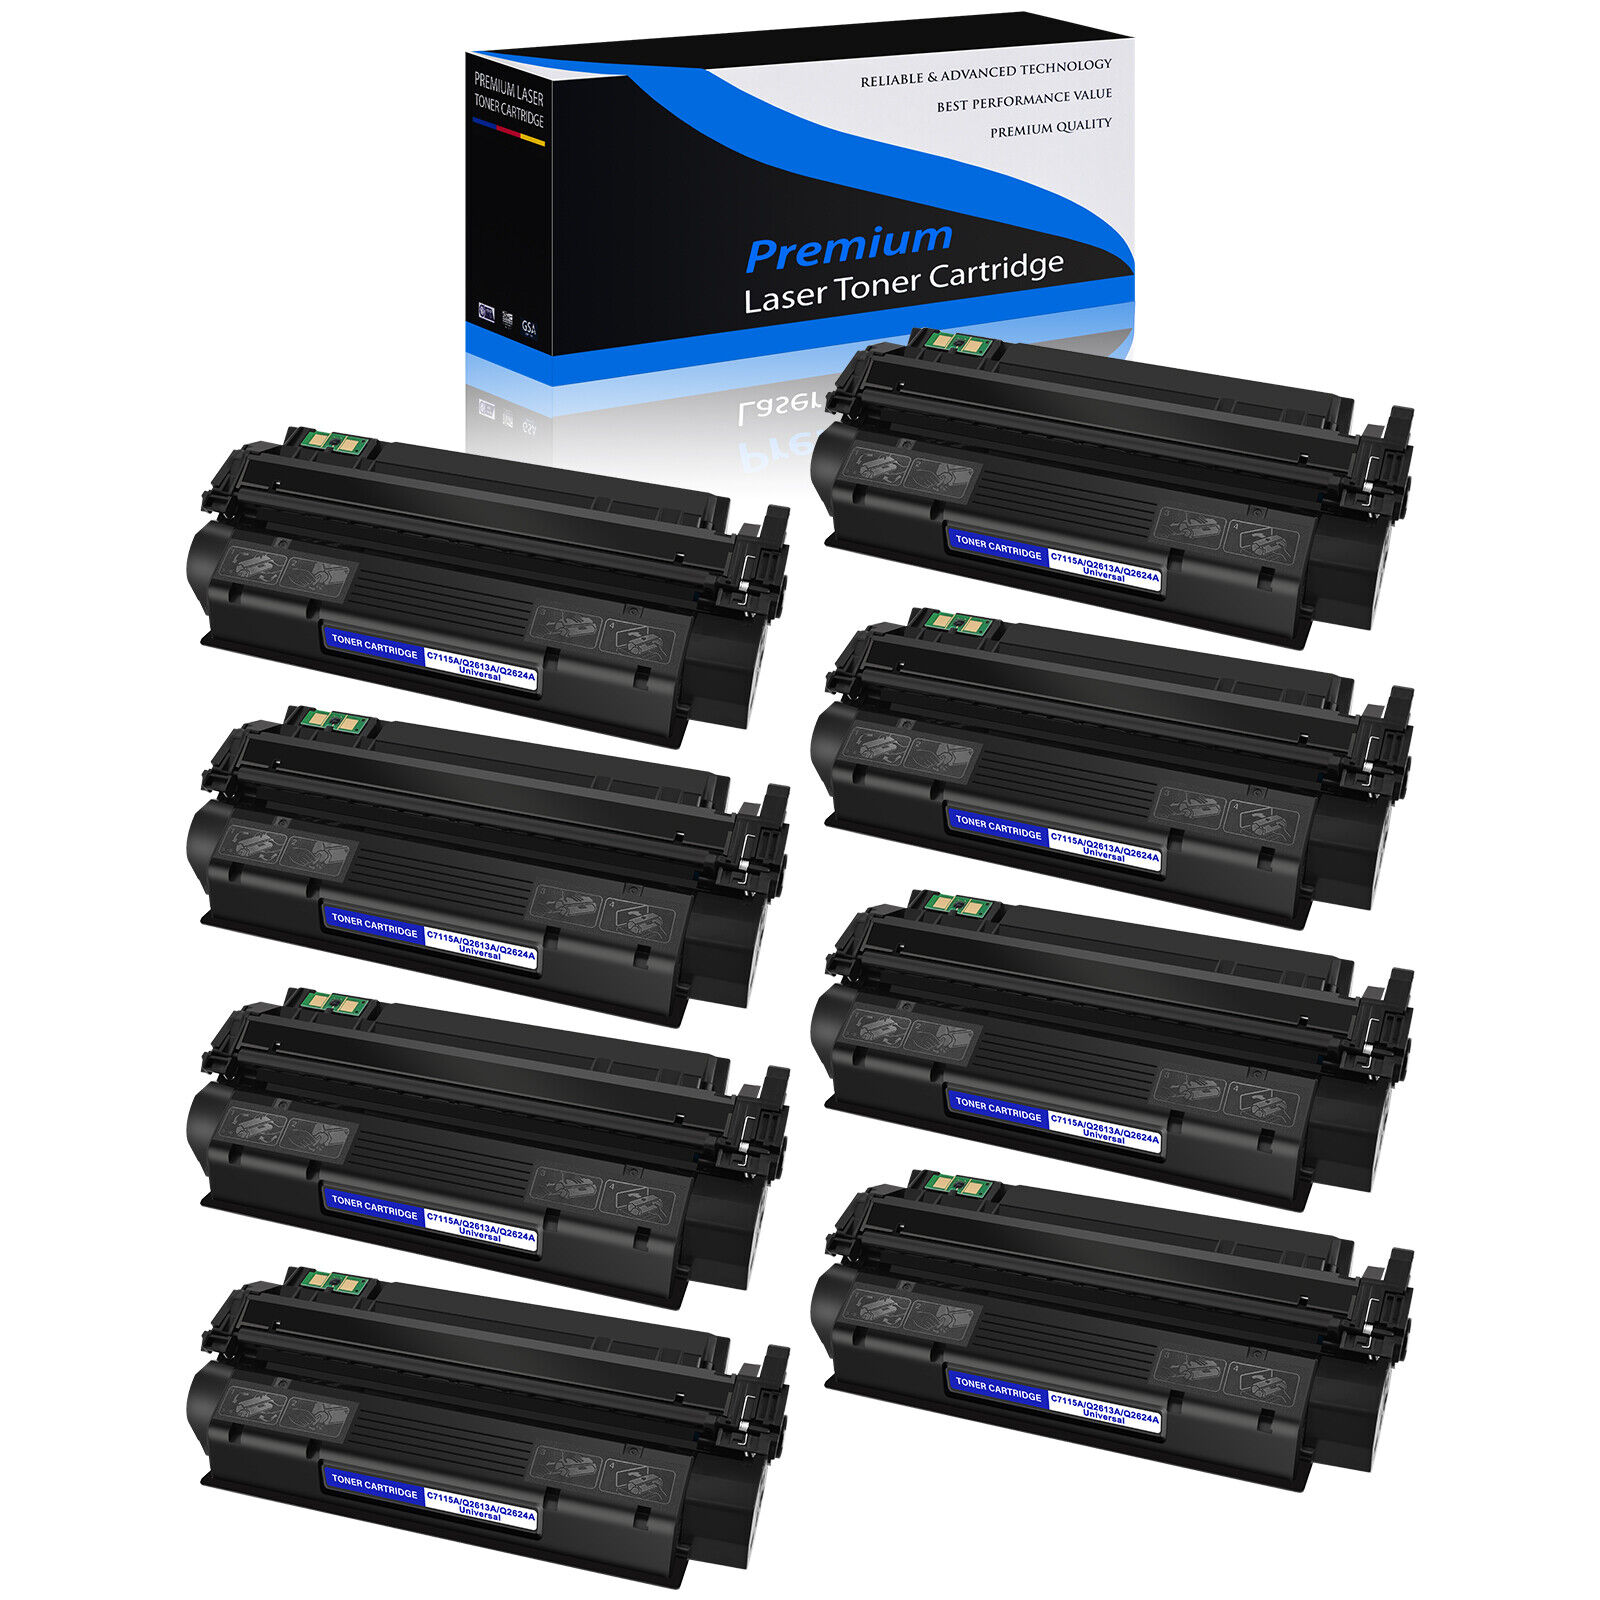 8 Pack C7115A Toner Cartridge for HP LaserJet 3320 3320n 3330 3380 3300 3300 MFP